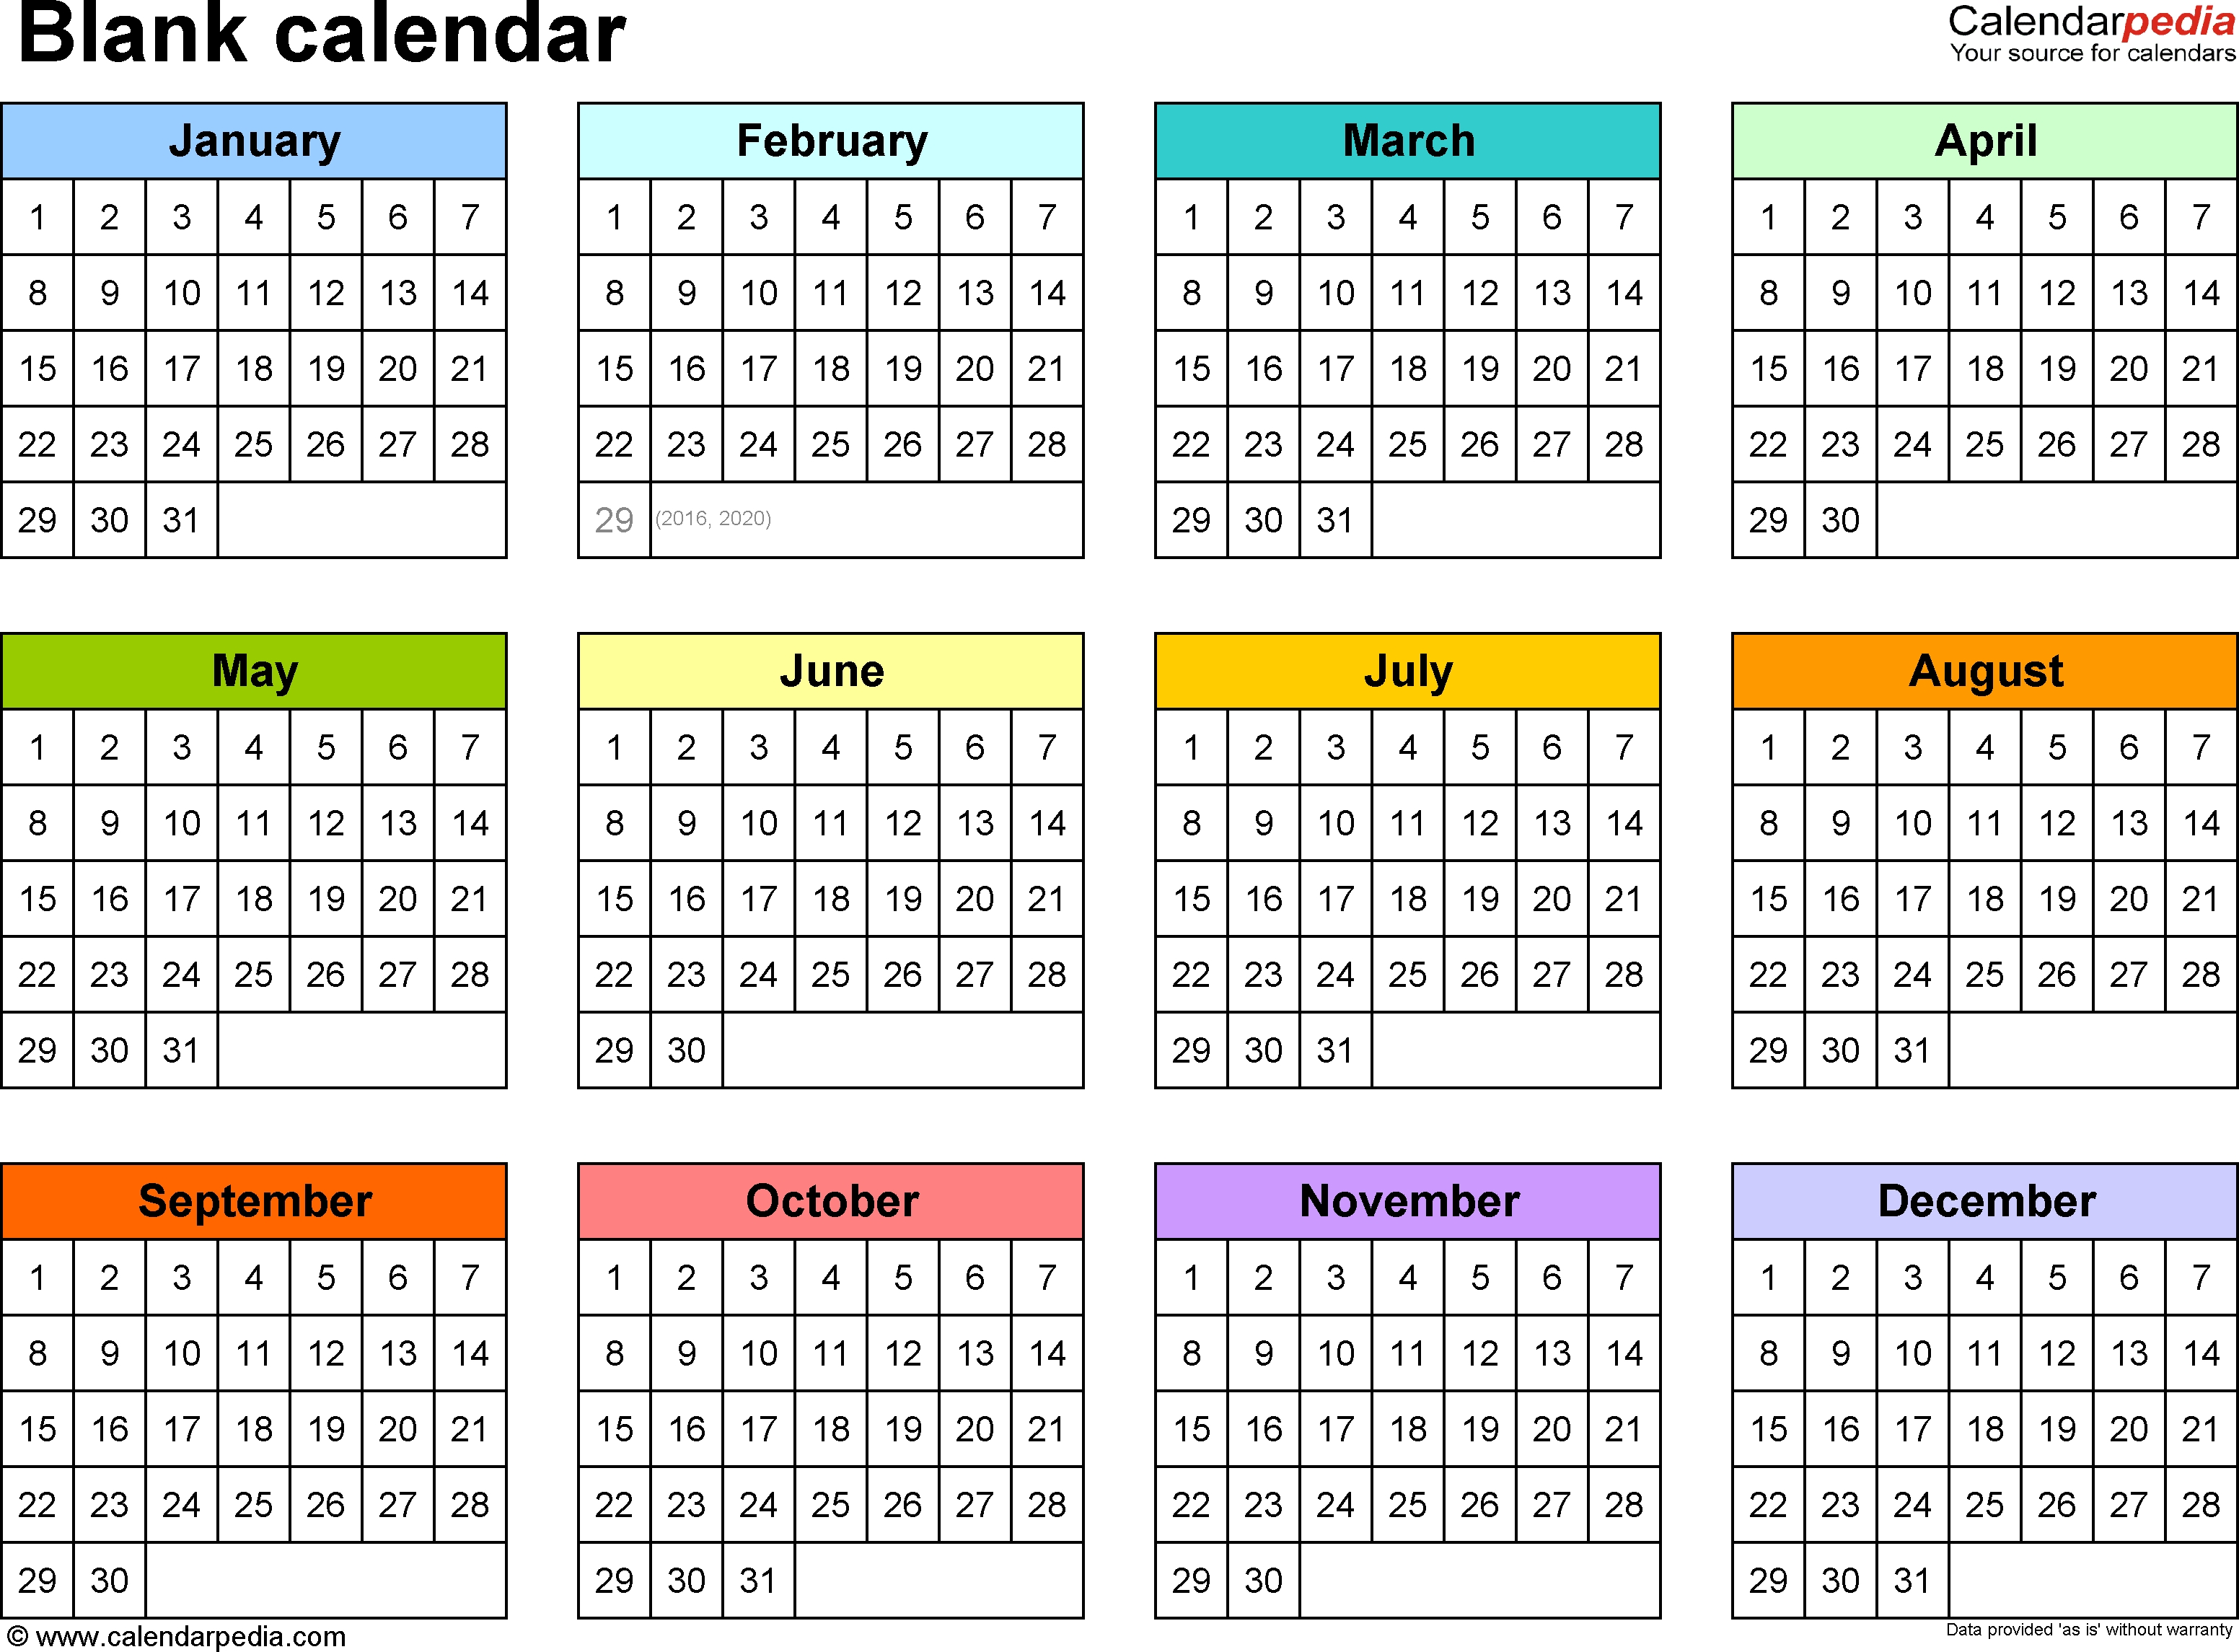 Blank Calendars - Free Printable Microsoft Word Templates